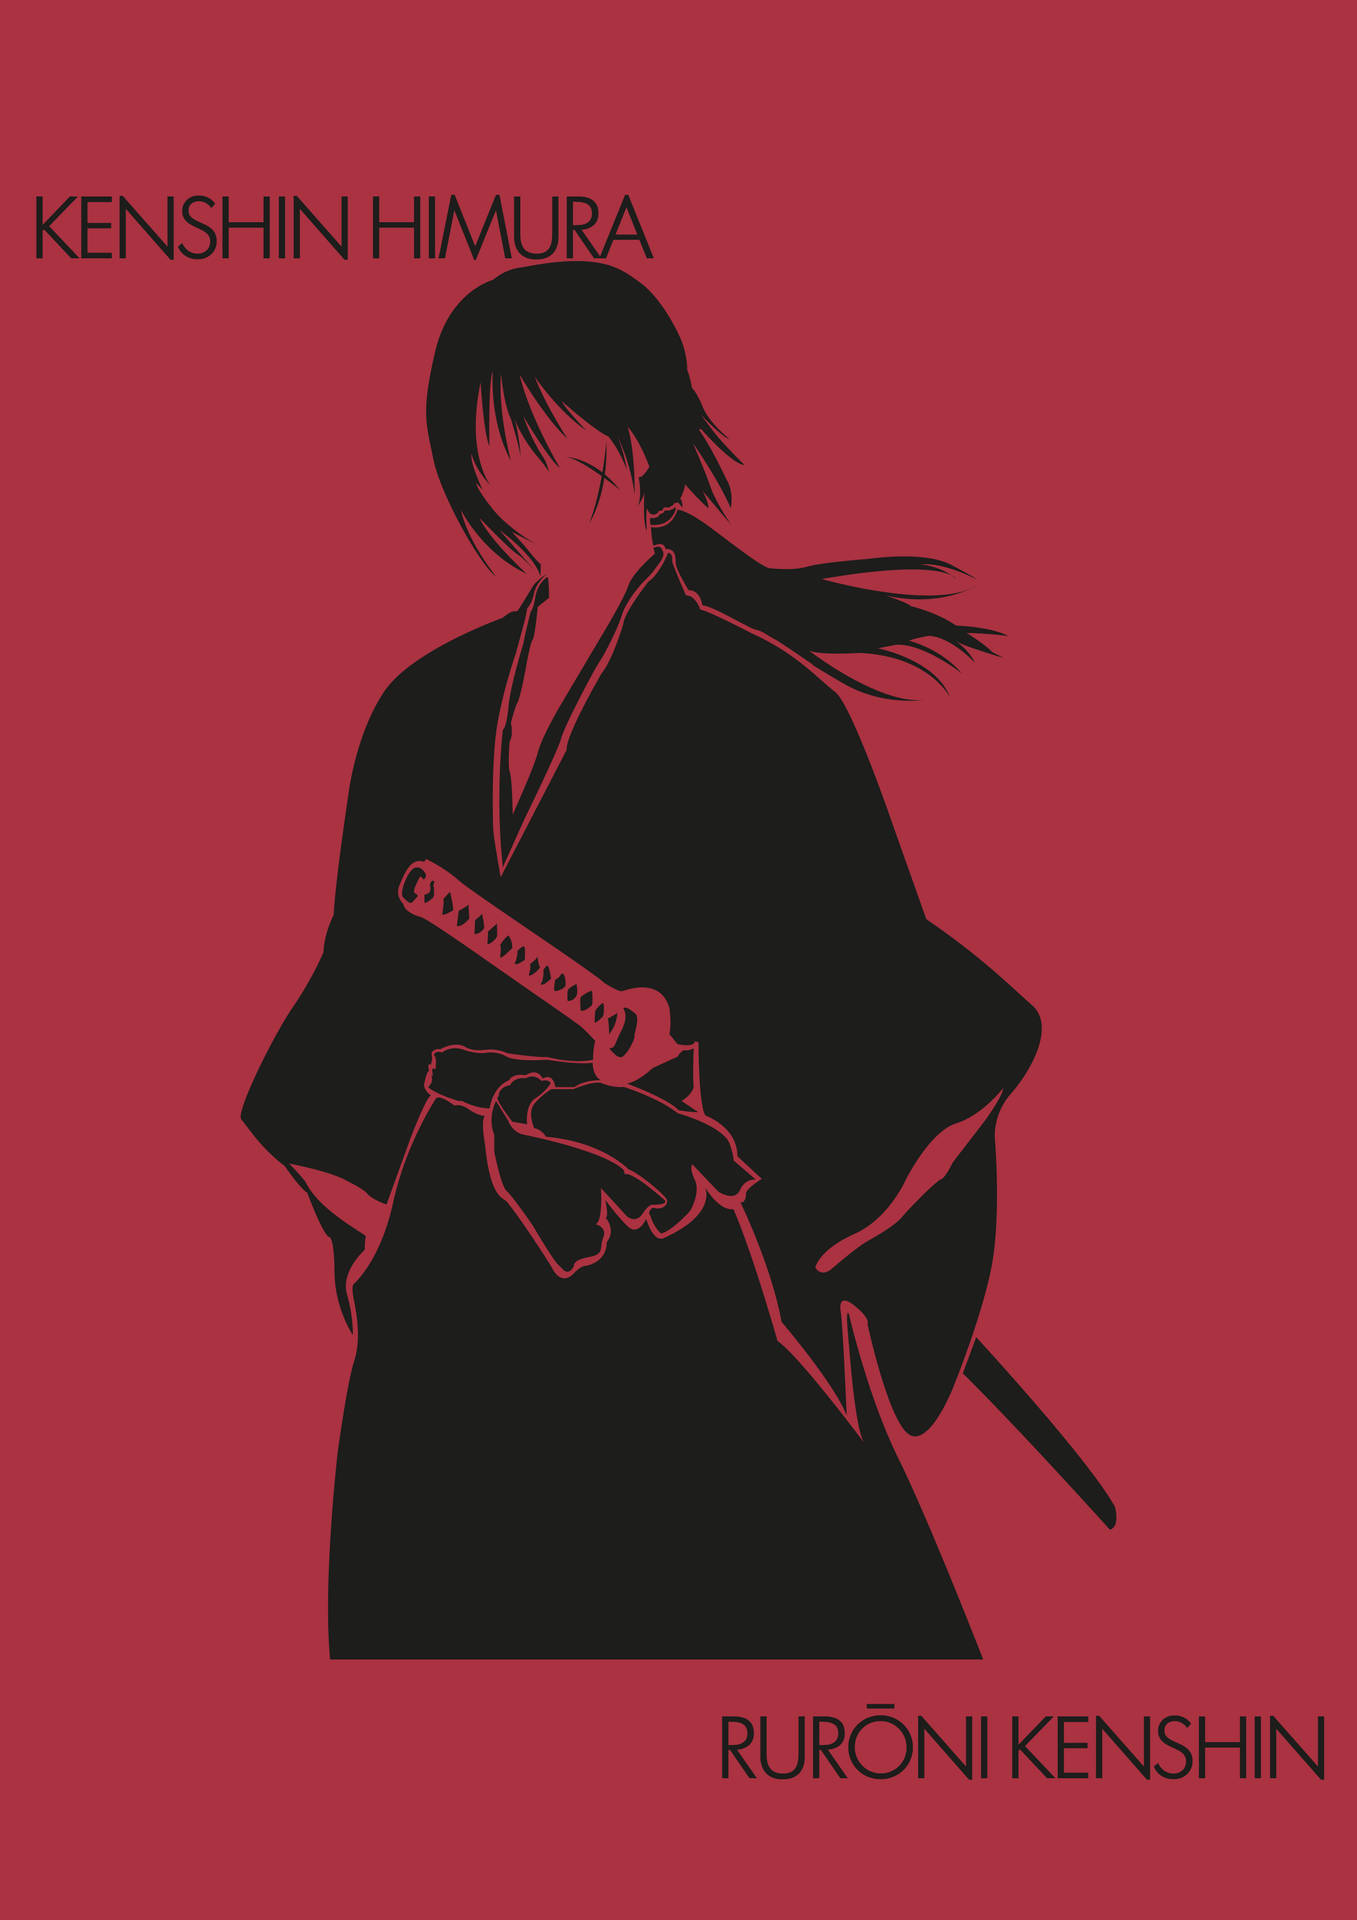 Papelde Parede Para Computador Ou Celular: Samurai X Minimalista Kenshin Himura. Papel de Parede